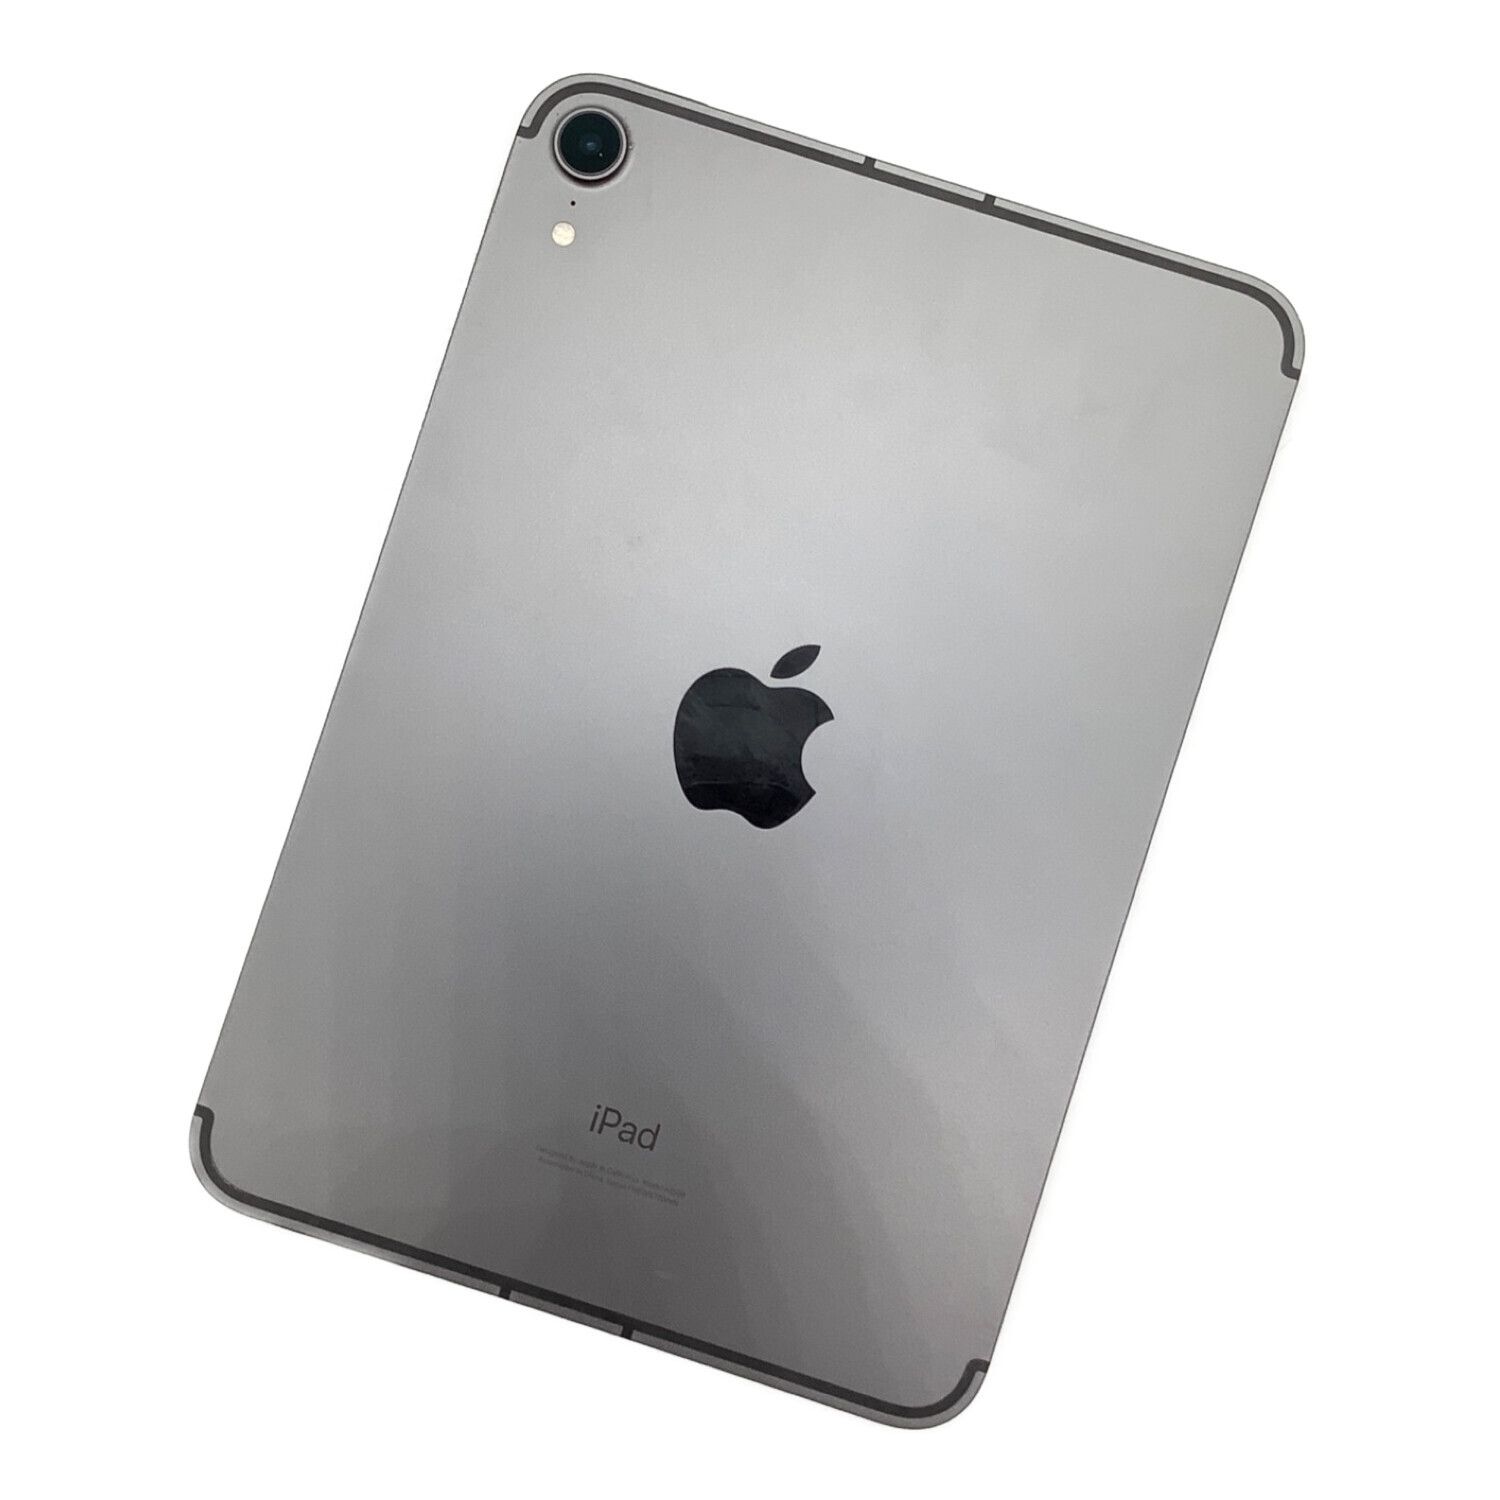 Apple (アップル) iPad mini(第6世代) 64GB Wi-Fi+Cellularモデル iOS 